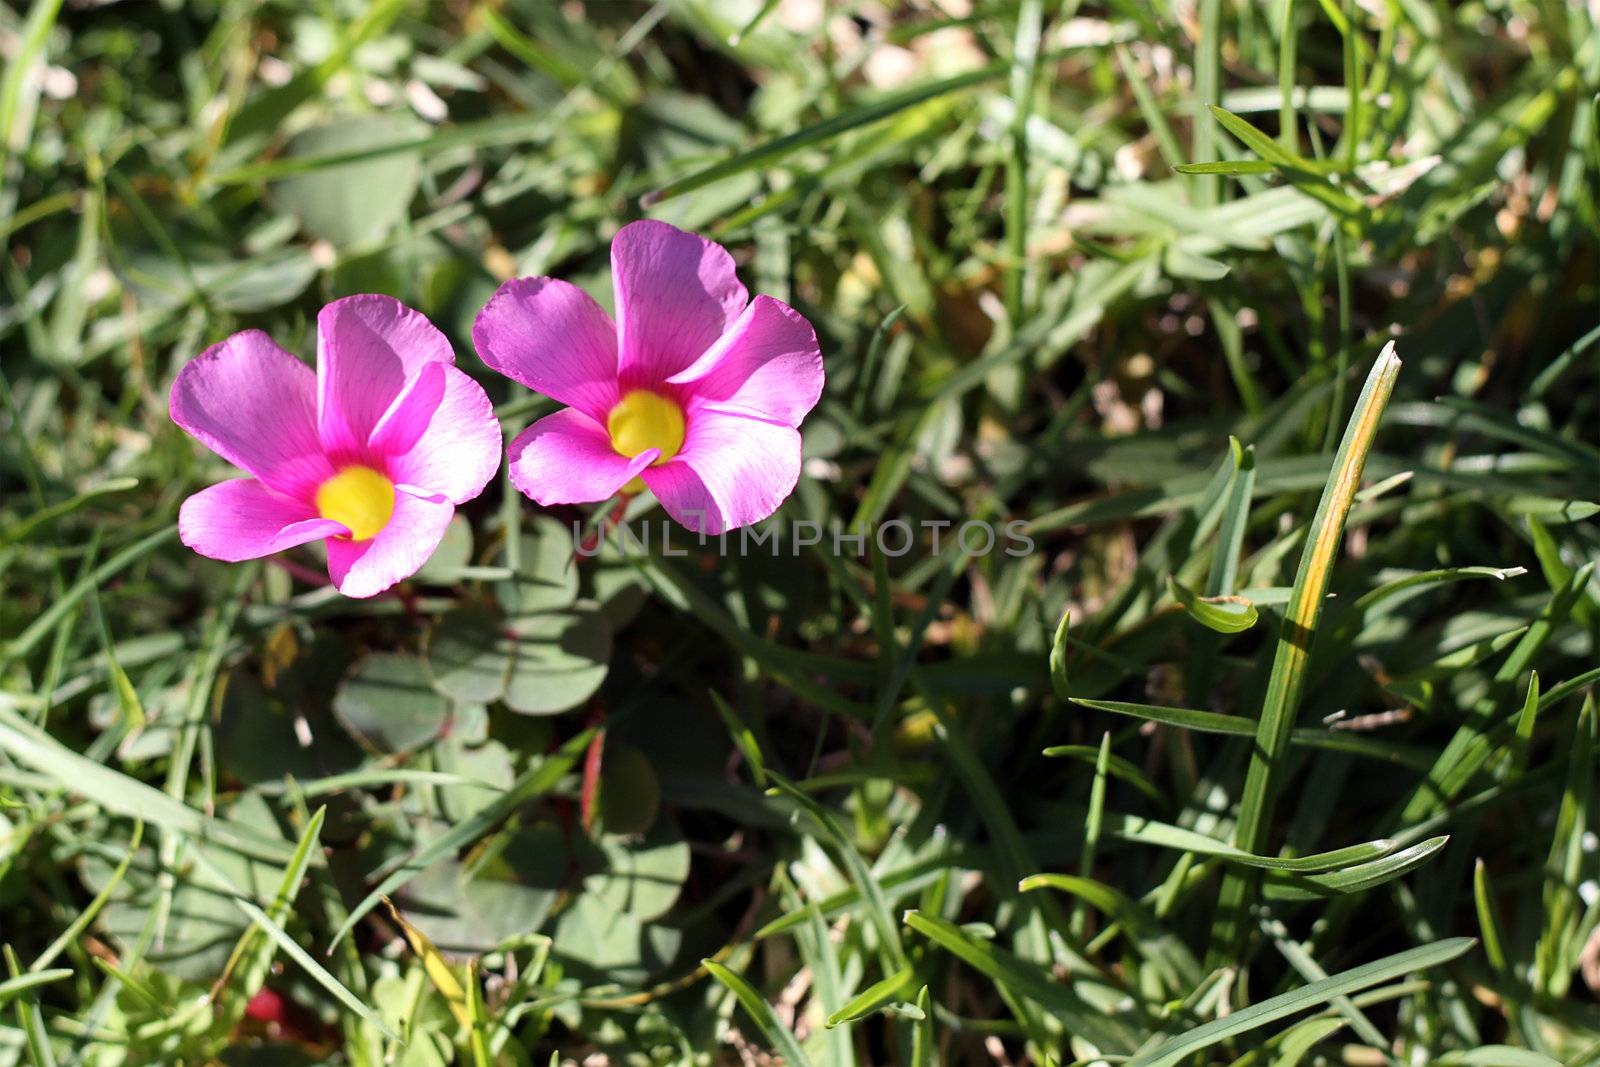 Pink oxalis (Oxalis corymbosa) growing in lawn by Cloudia